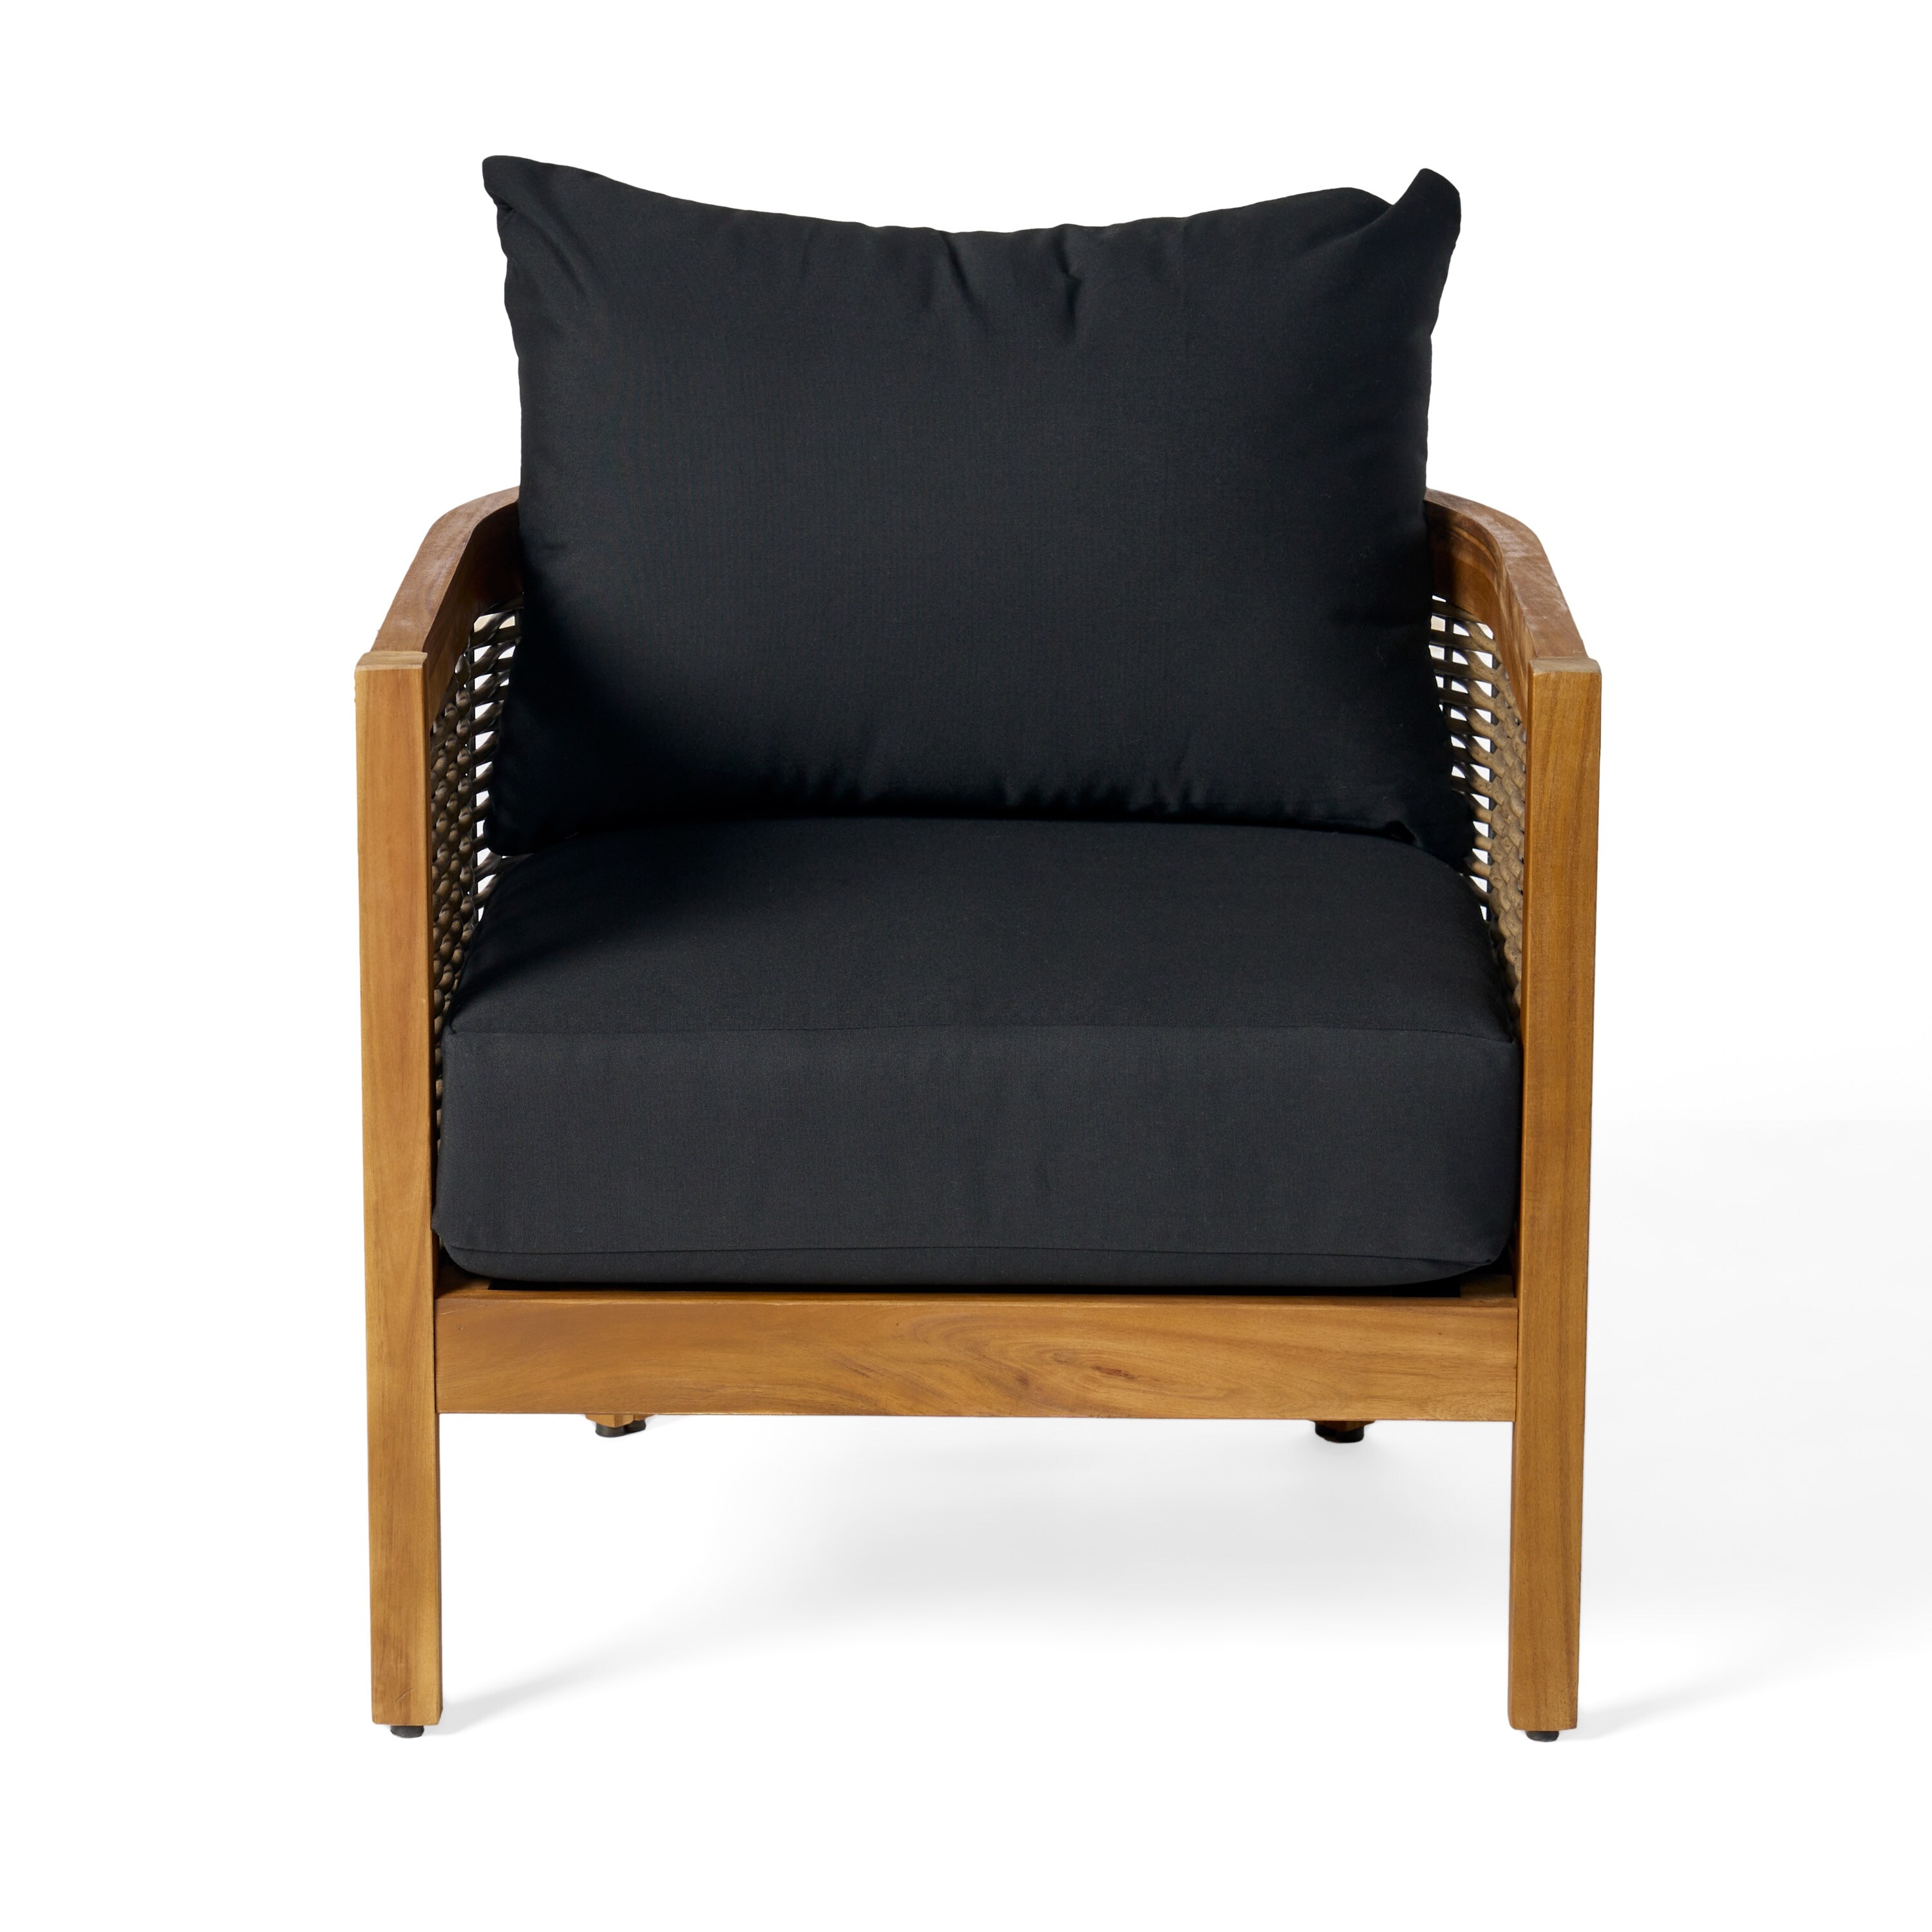 Burchett 2pk Outdoor Acacia Wood Club Chairs with Cushions - Teak/Brown/Beige - Christopher Knight Home